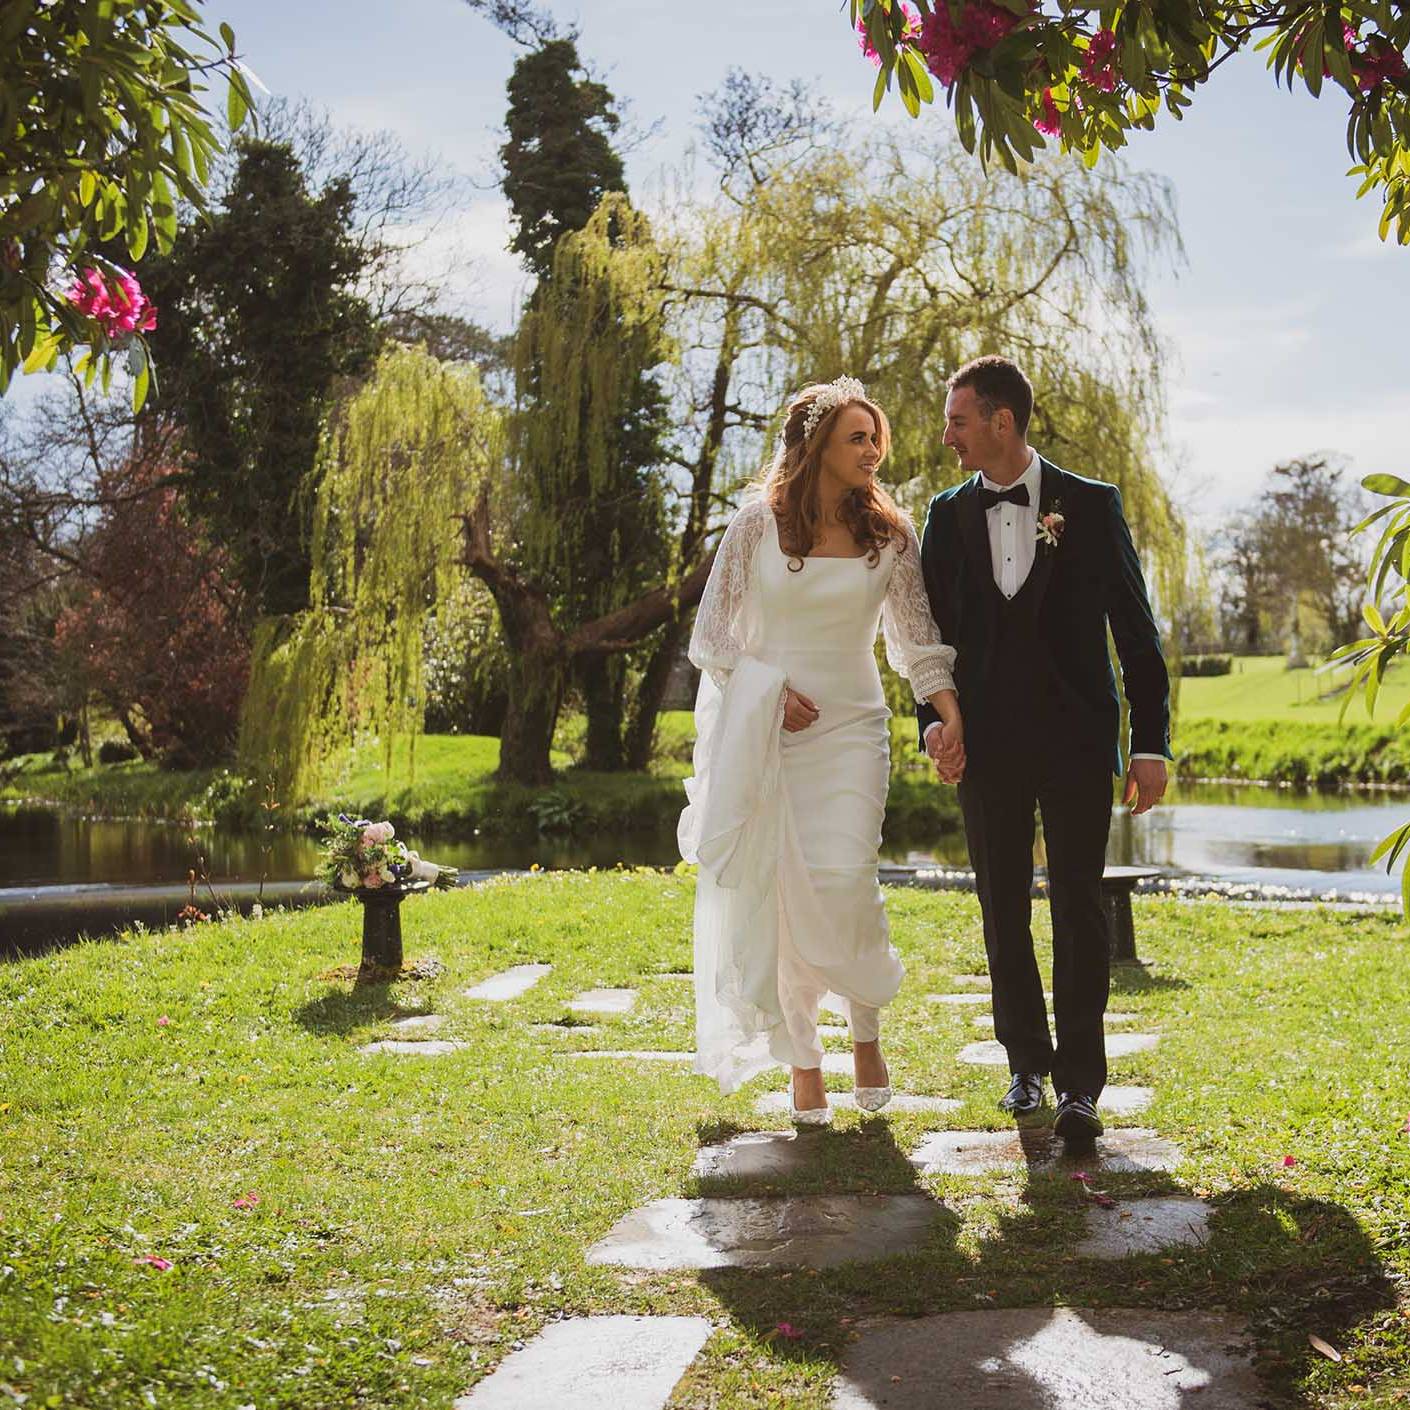 Bellingham Castle Wedding - Colleen & Seán emerge through the foliage as the sun shines on them